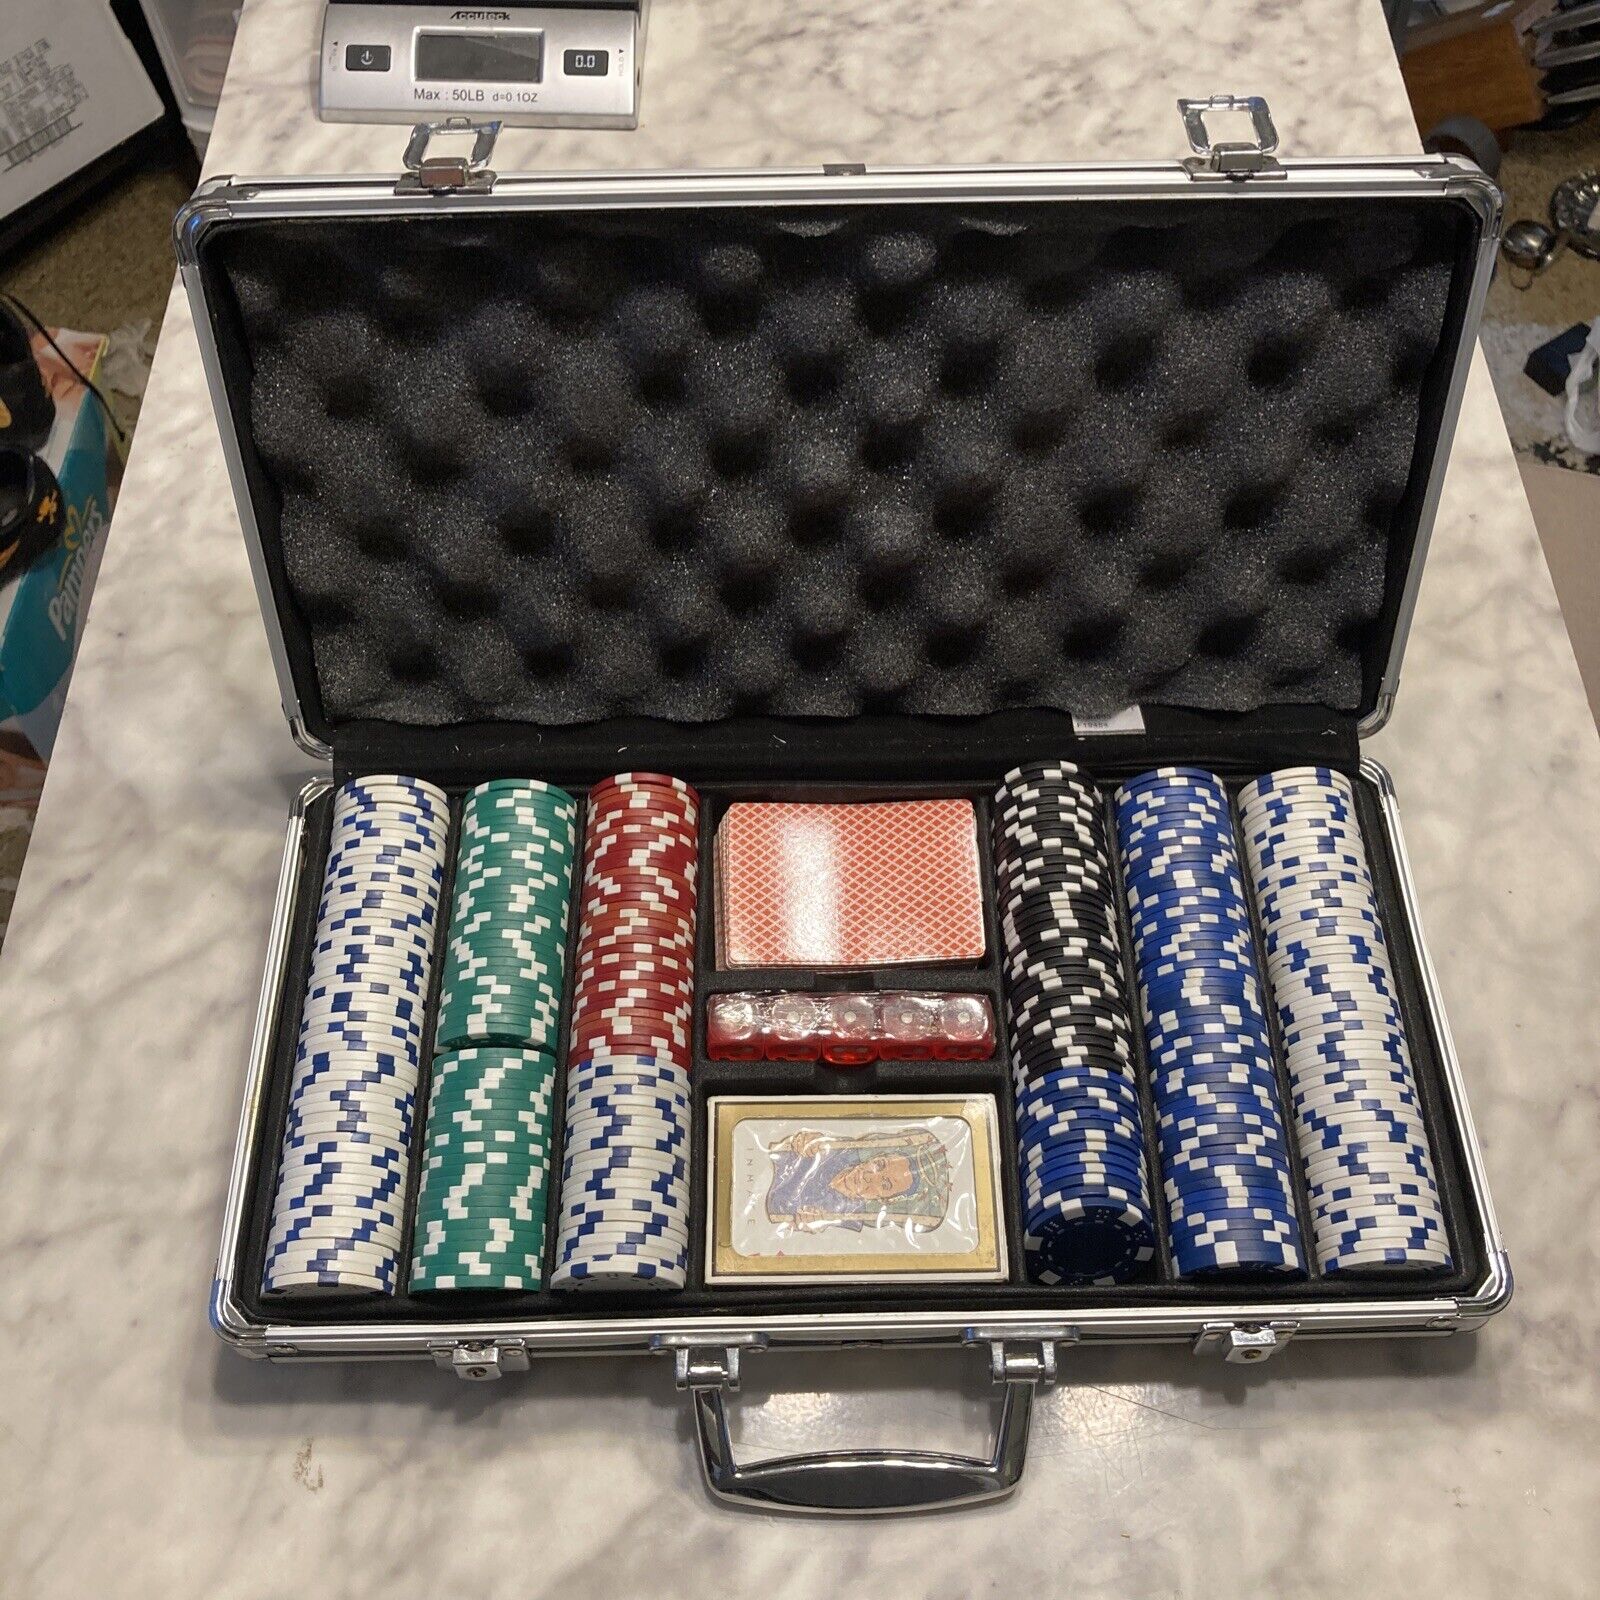 ESPN Poker Club Professional Poker Set In Carry Case 300 Chips Cards No Keys